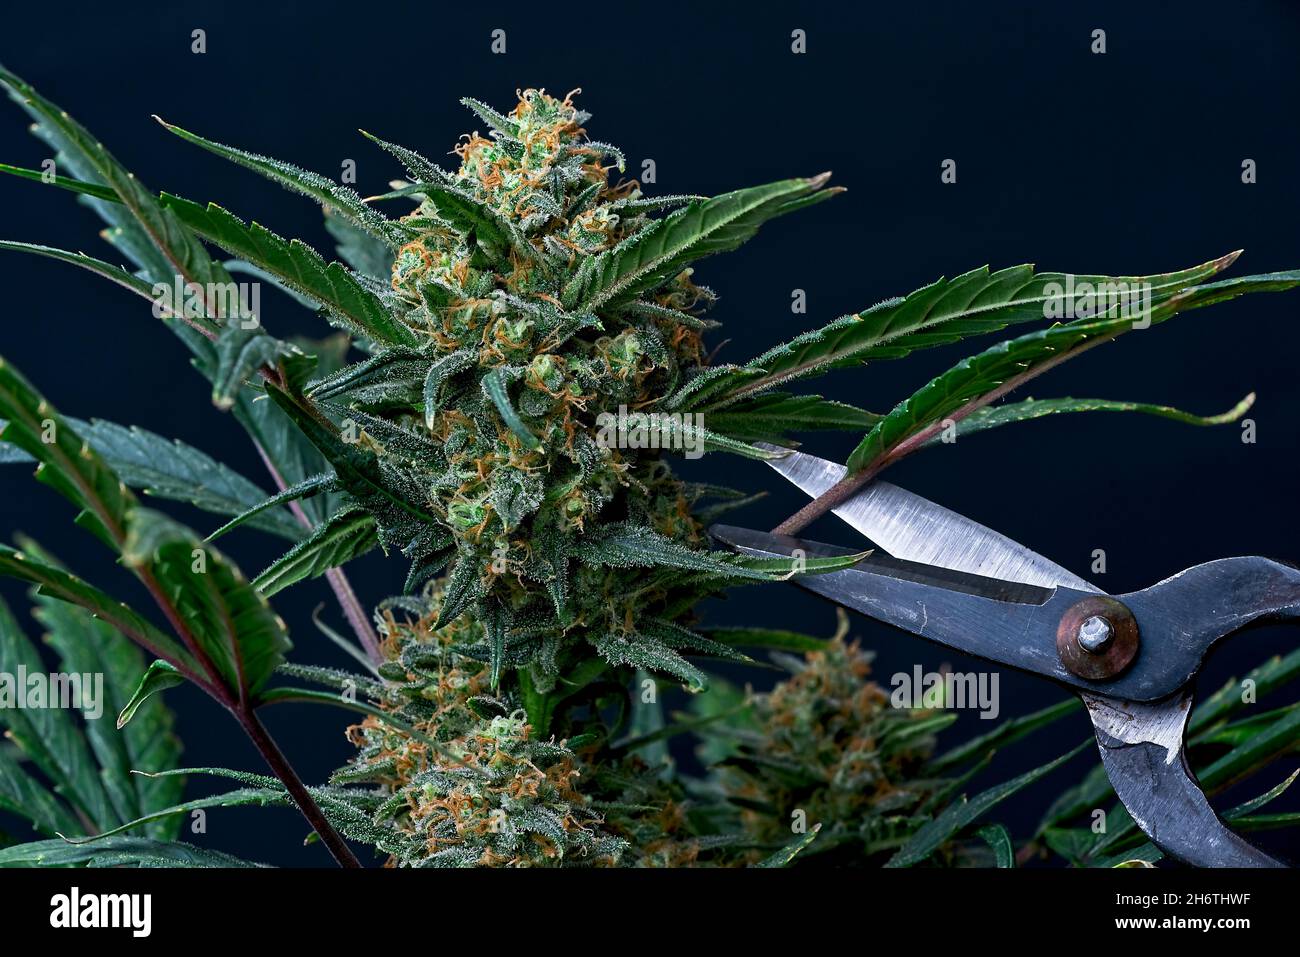 Special autoflower cannabis strain - epilogue